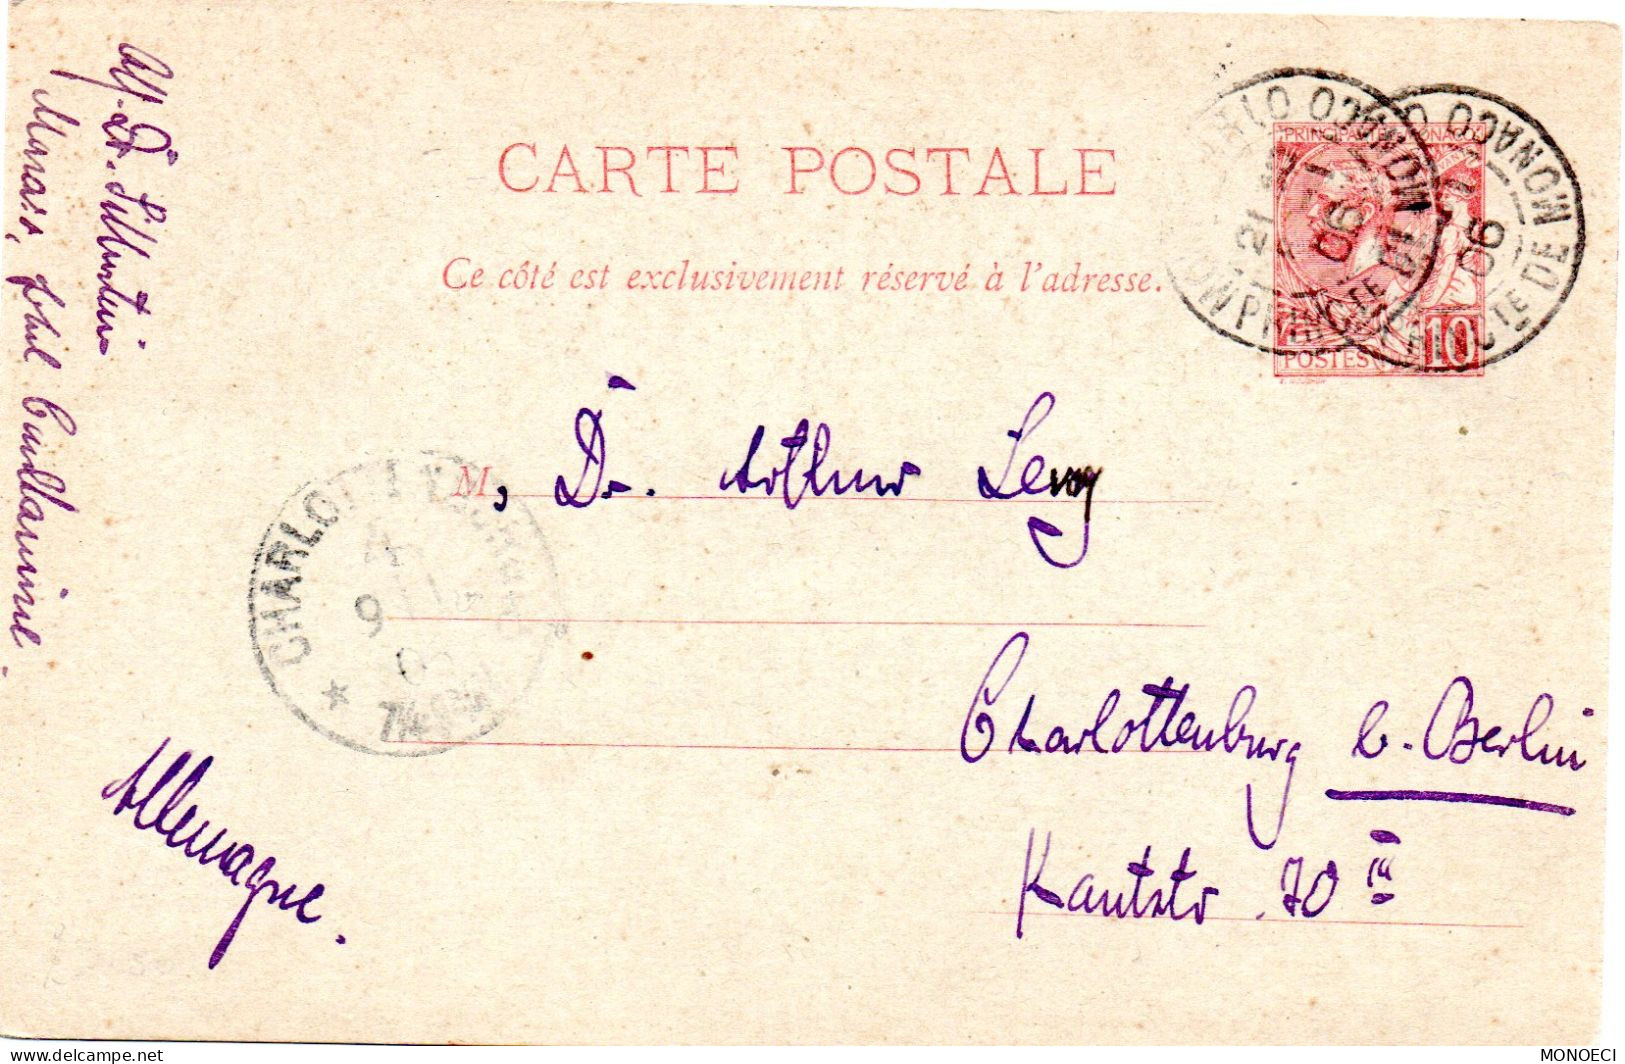 MONACO -- MONTE CARLO -- Entier Postal -- Carte Postale -- Prince Albert 1er -- 10 C. Rouge Sur Vert (1901) - Enteros  Postales